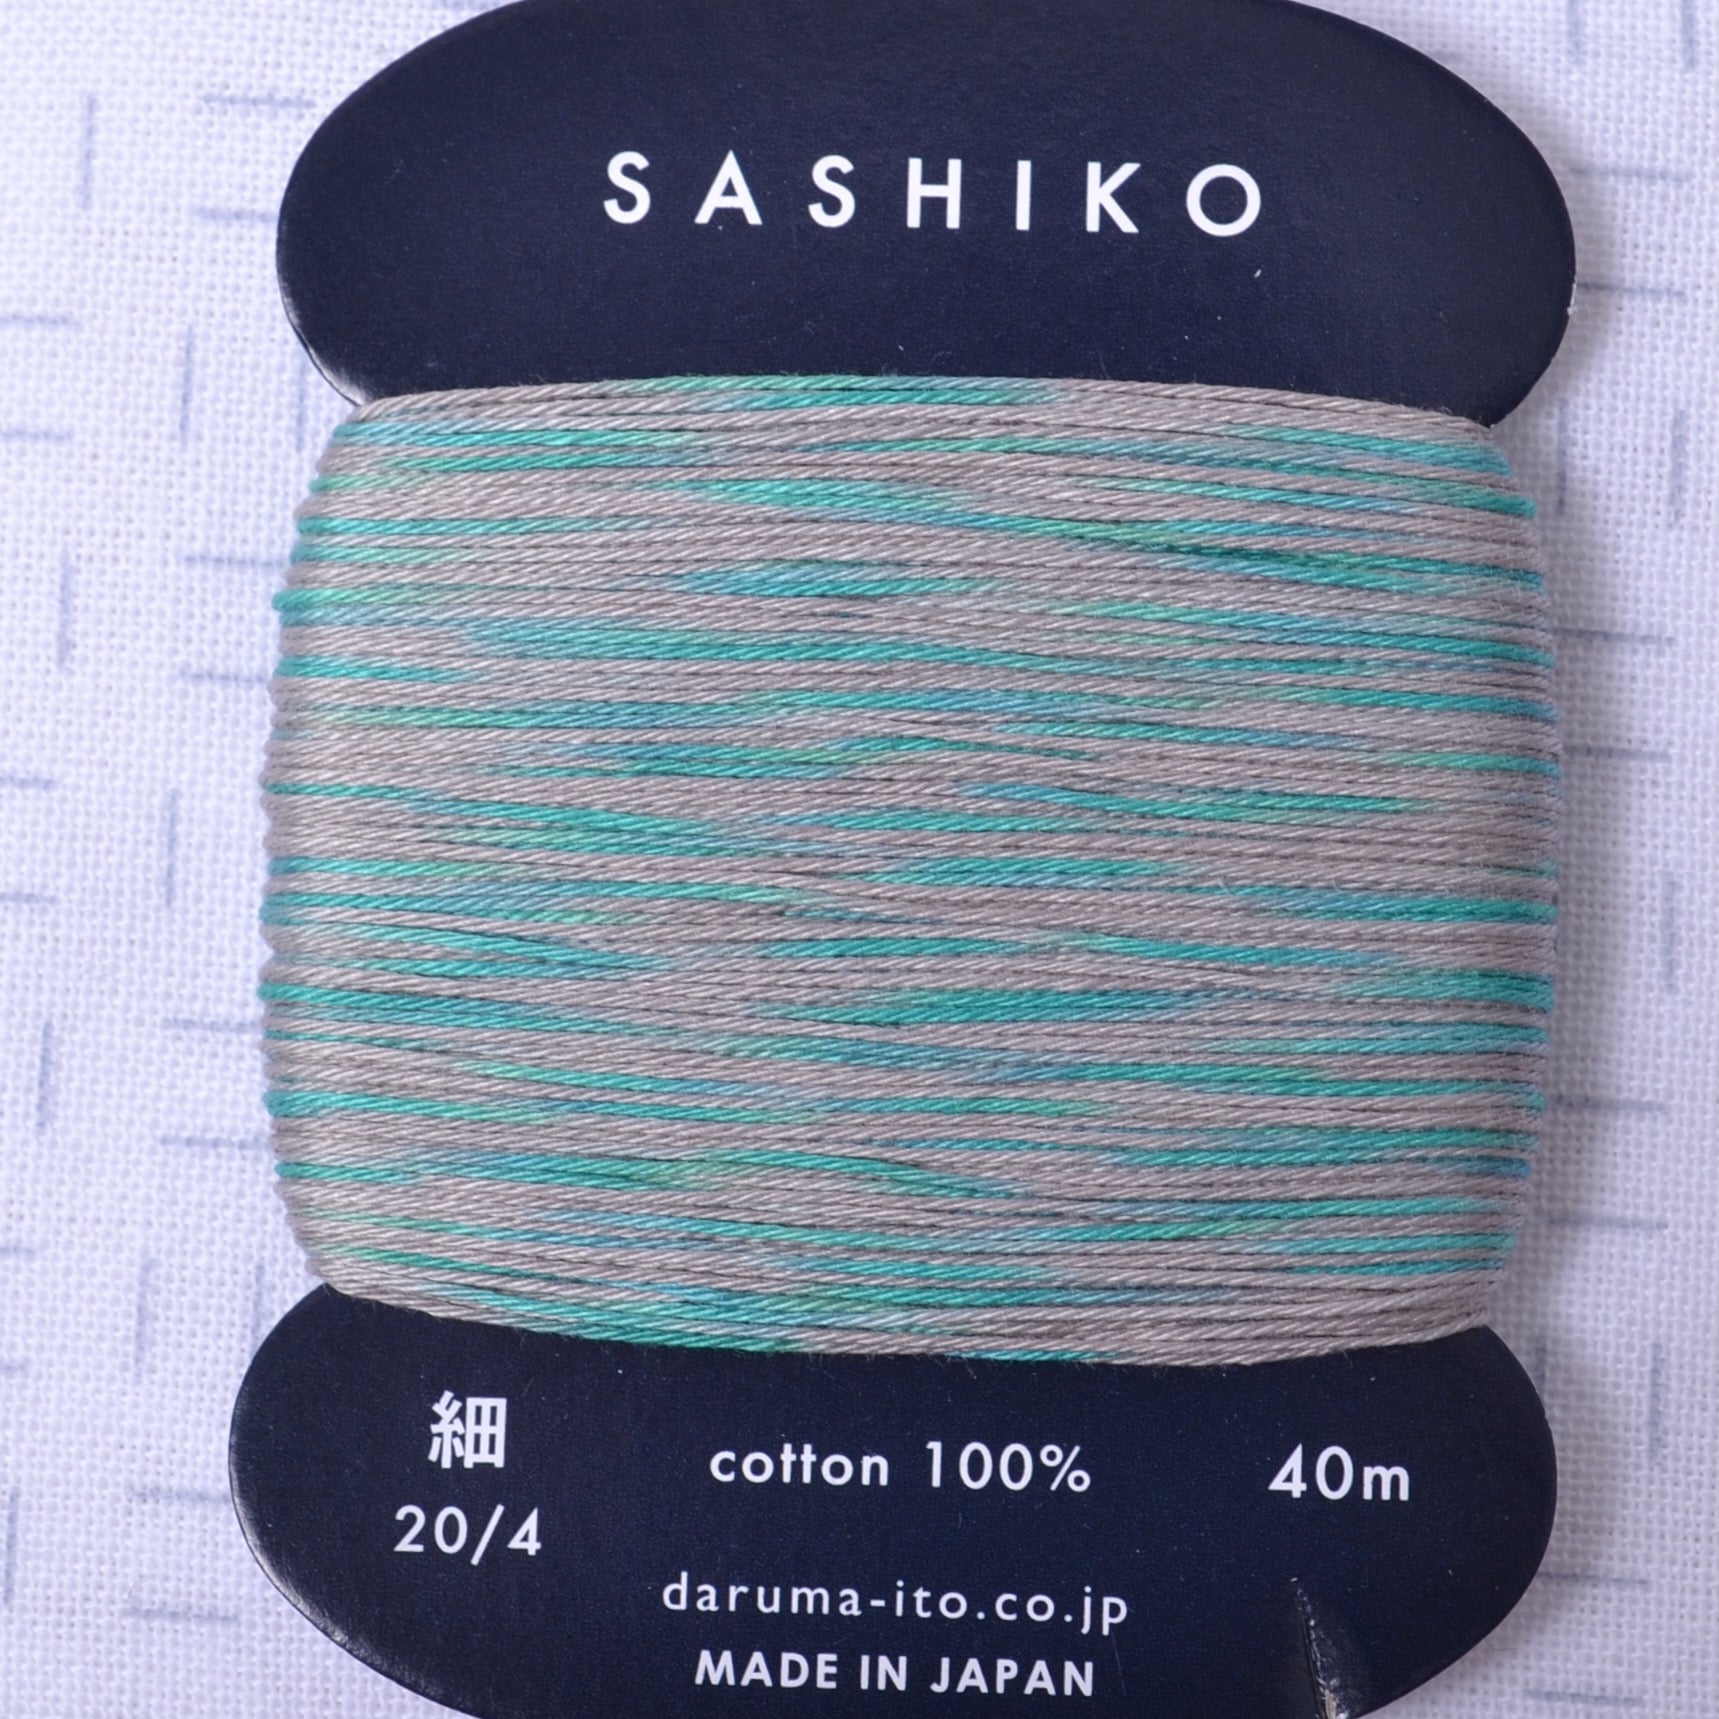 Daruma Variegated Sashiko Thread 20/4, Rain Sounds